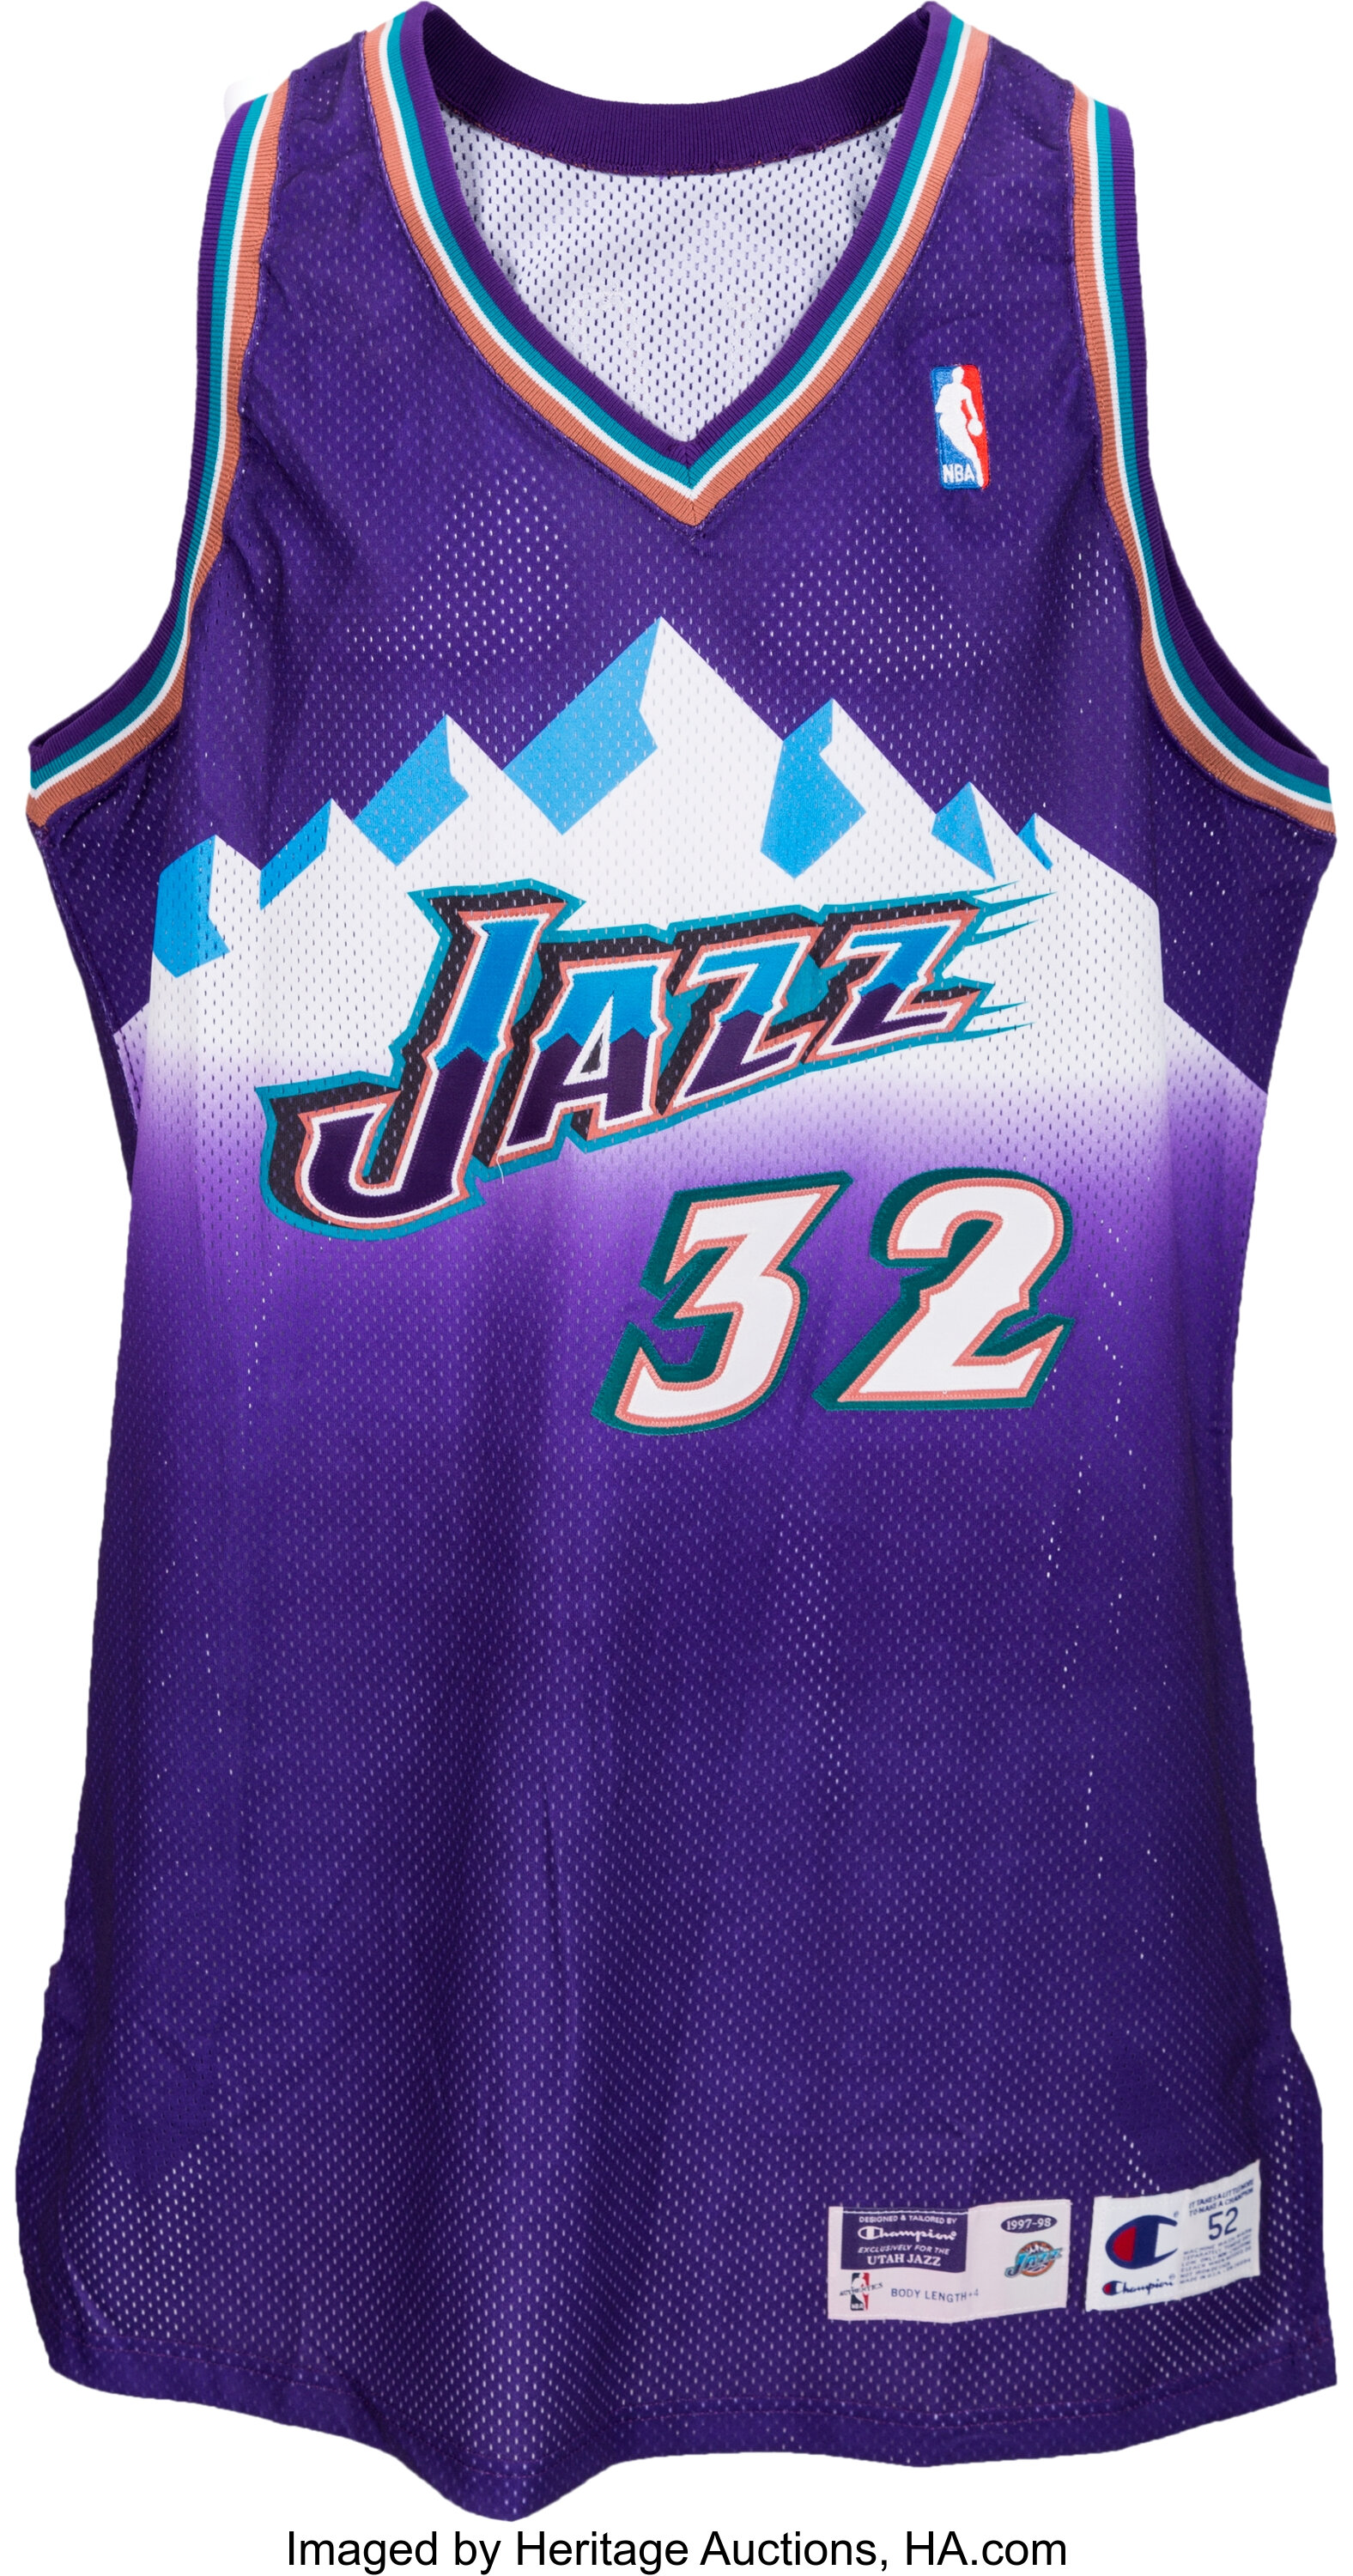 Utah Jazz Alternate/GSW 1997 jerseys : r/NBA2k